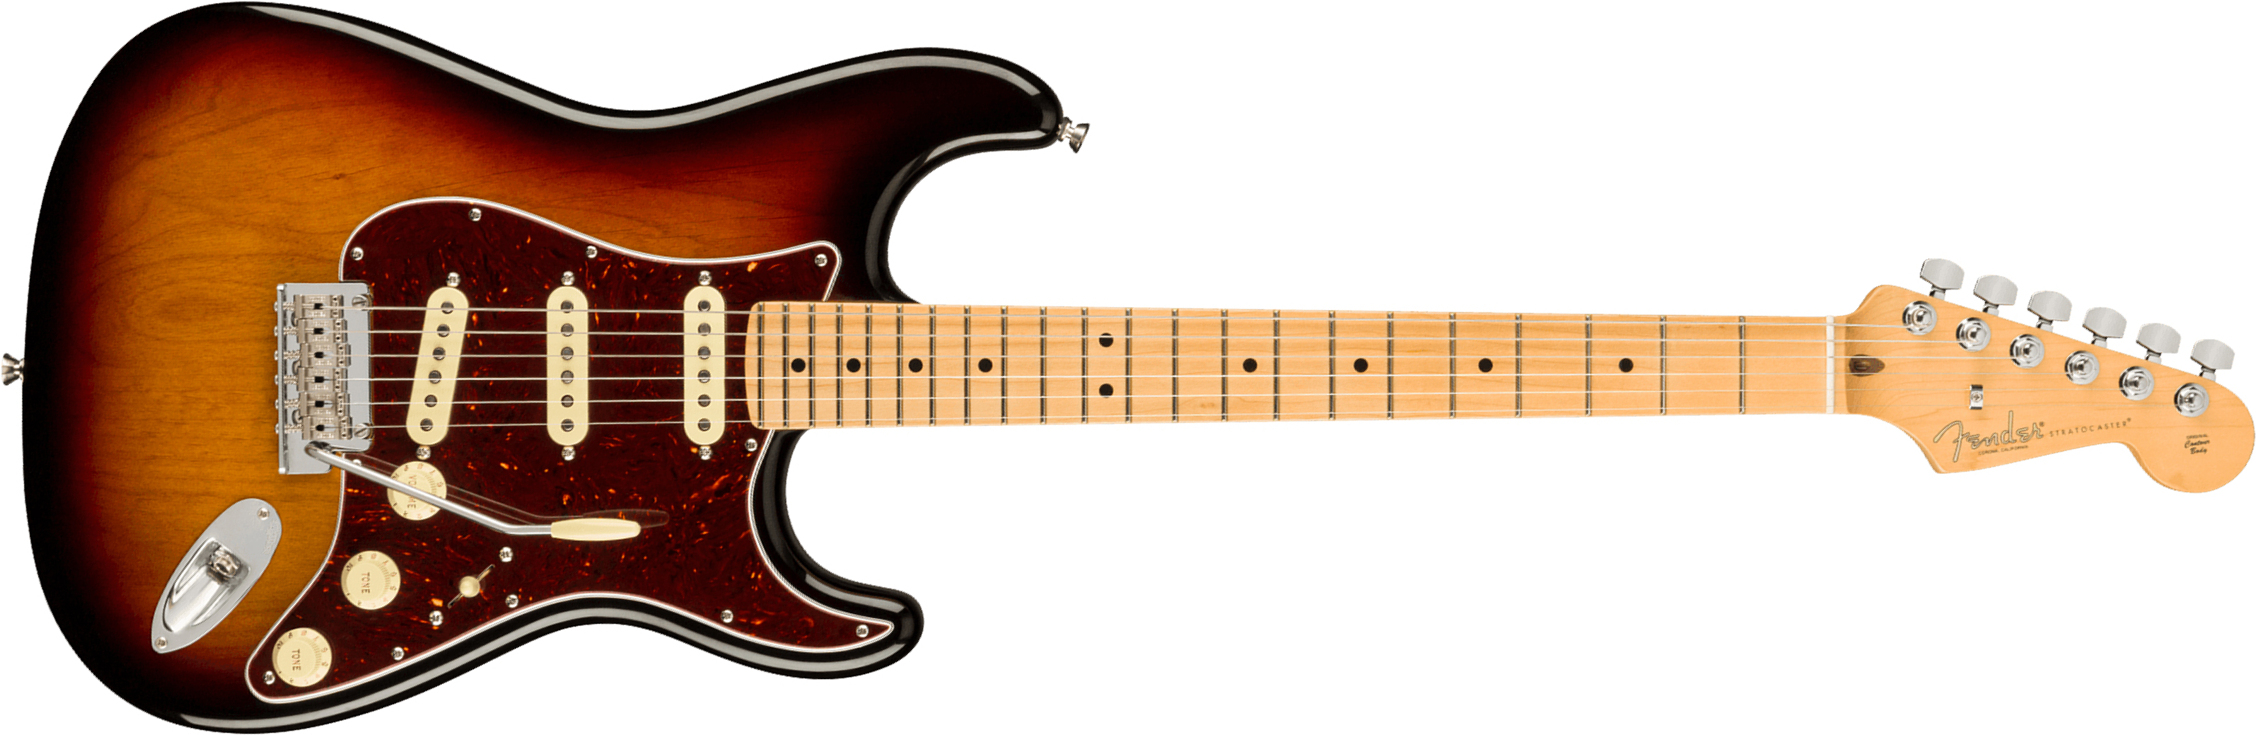 Fender Strat American Professional Ii Usa Mn - 3-color Sunburst - Str shape electric guitar - Main picture